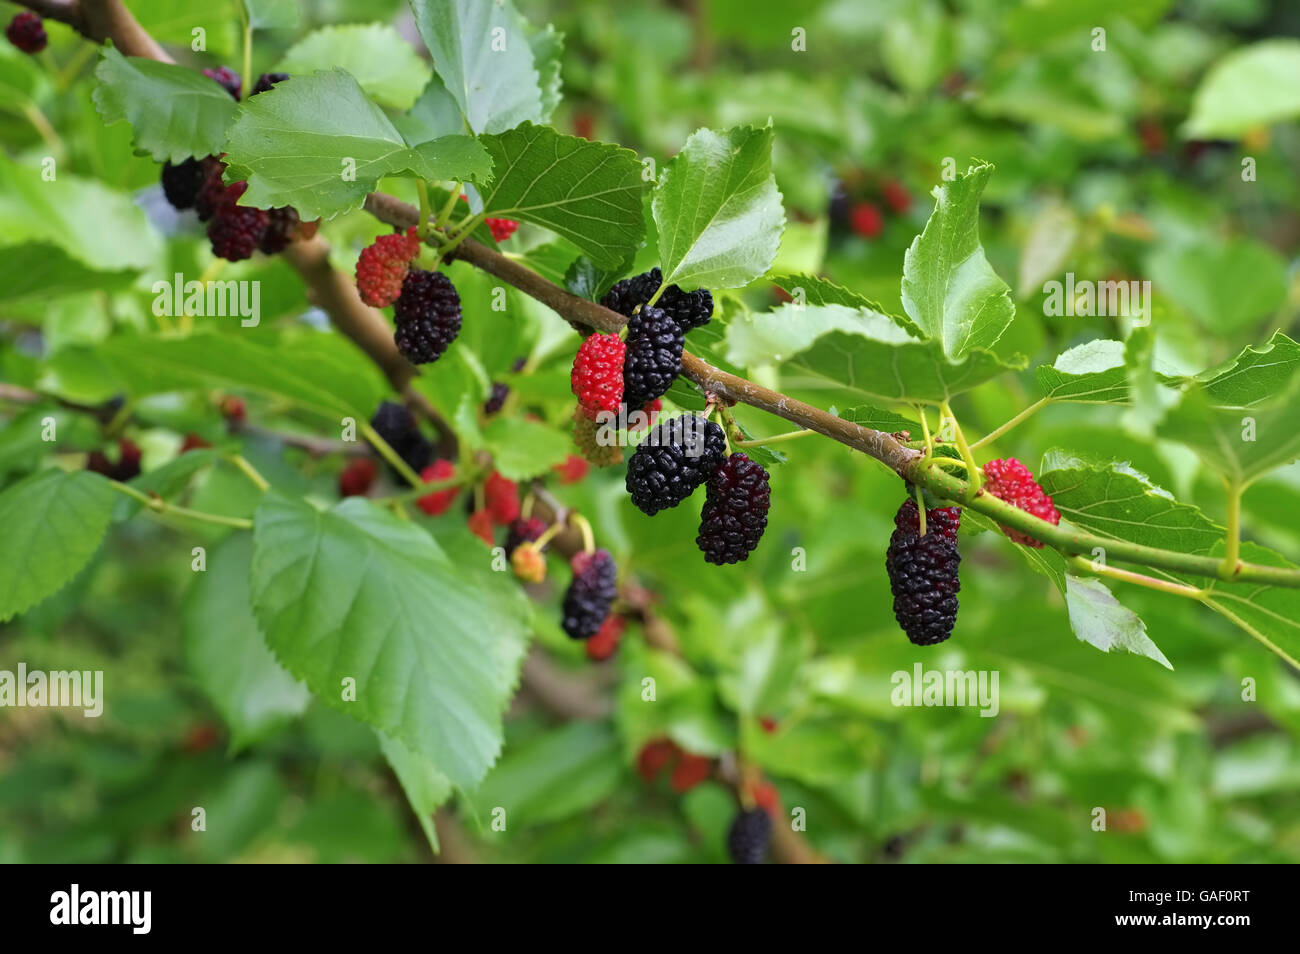 schwarze reife und rote unreife Maulbeeren am Baum - black ripe and red unripe mulberries on the tree Stock Photo